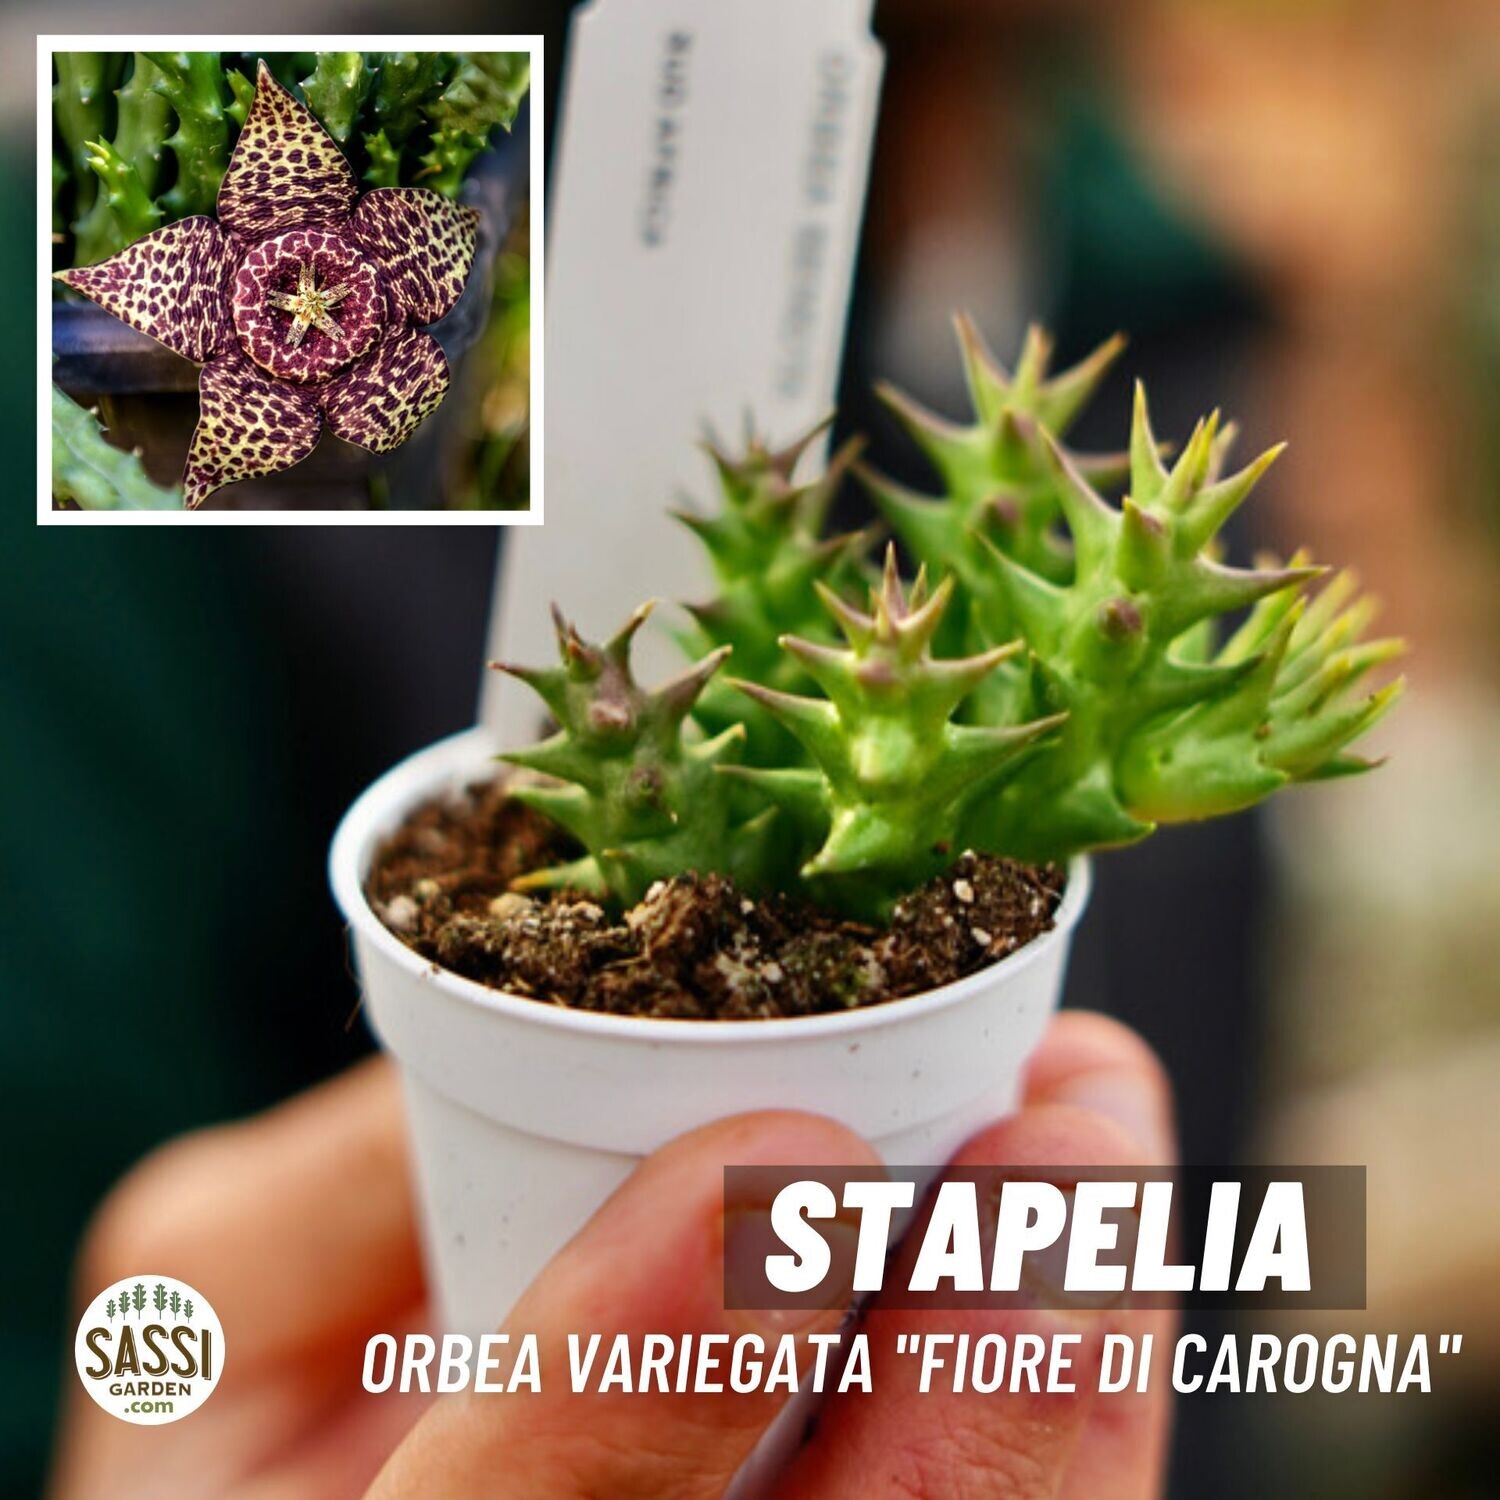 Stapelia  Variegata “ Orbea Variegata Fiore di Carogna” vaso 5